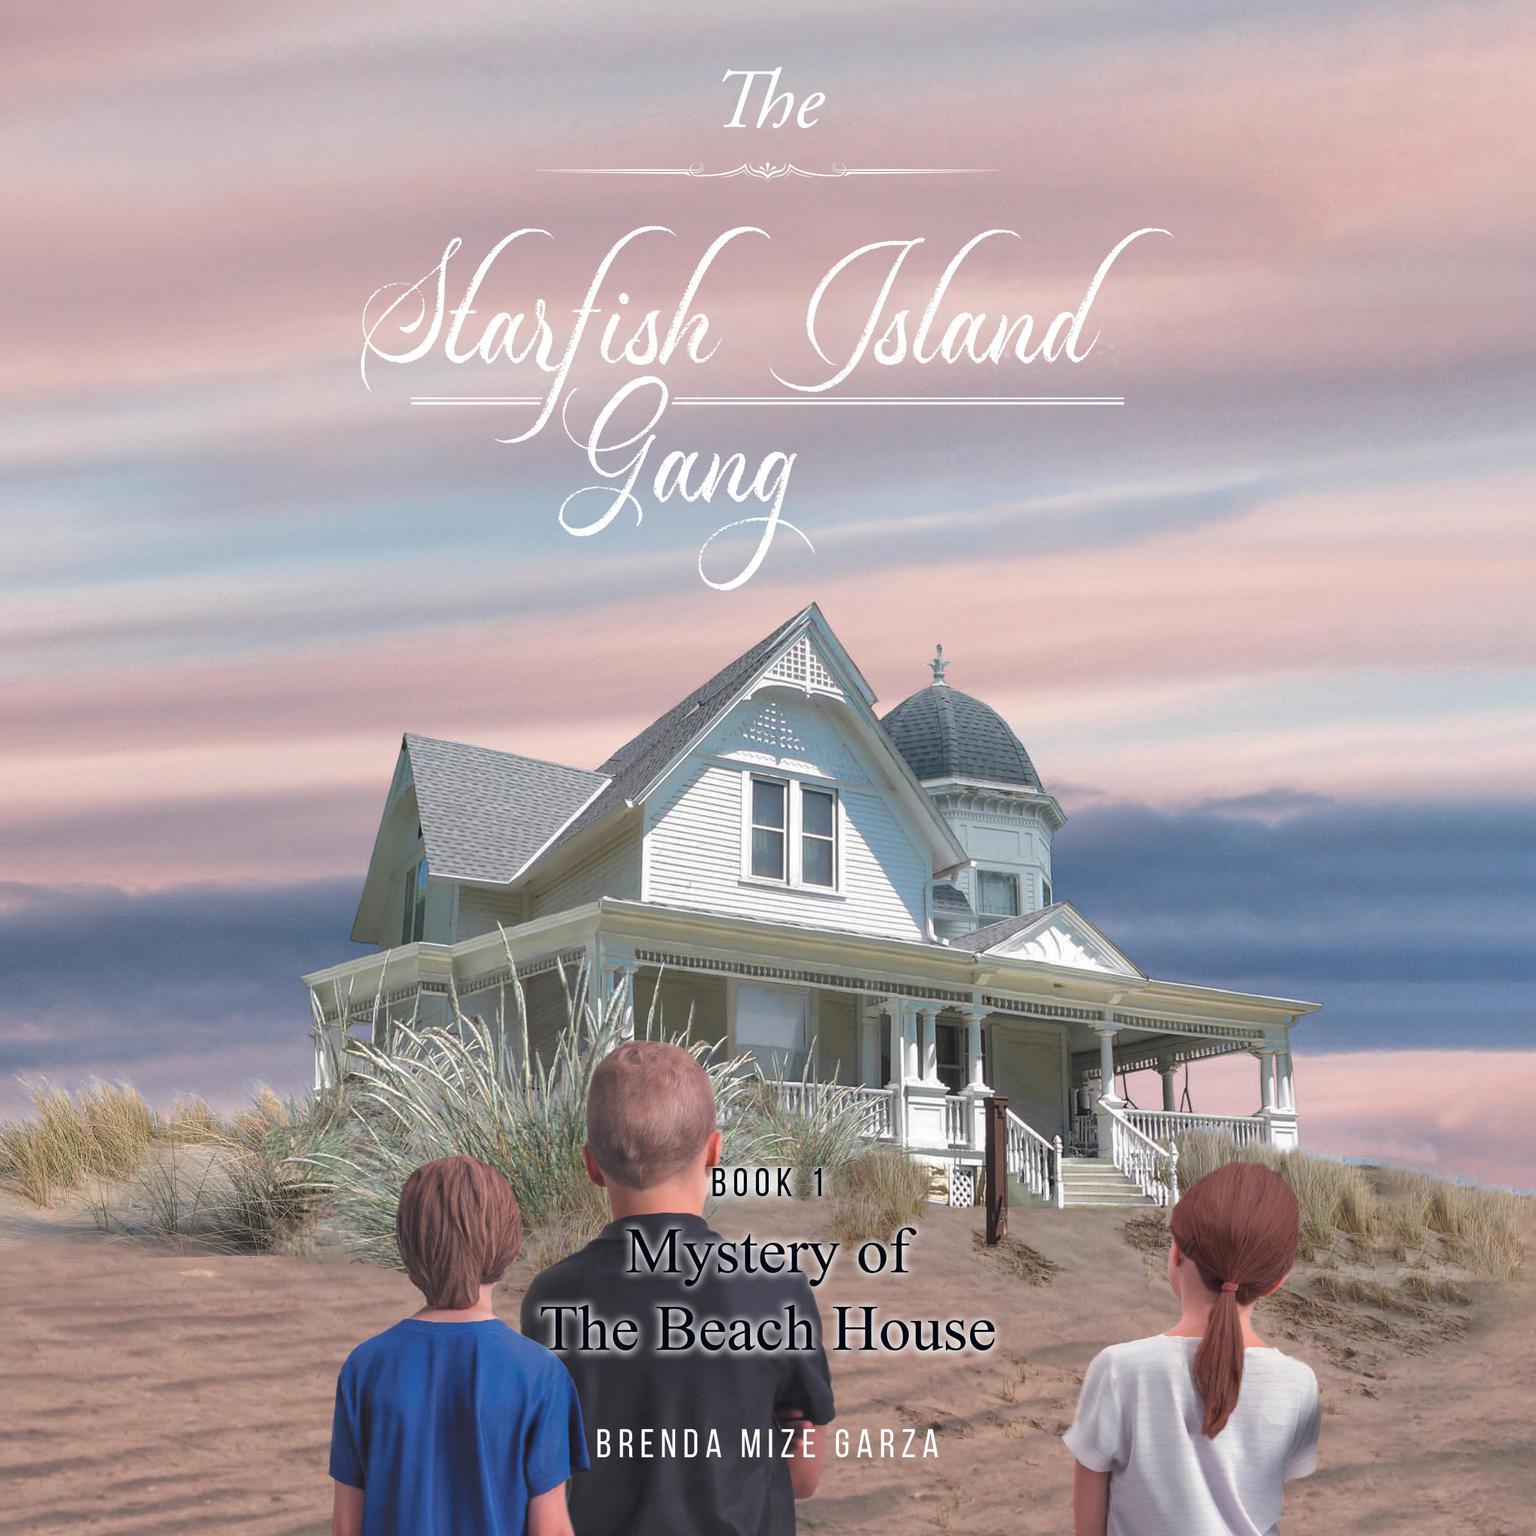 The Starfish Island Gang: Mystery of The Beach House Audiobook, by Brenda Mize Garza